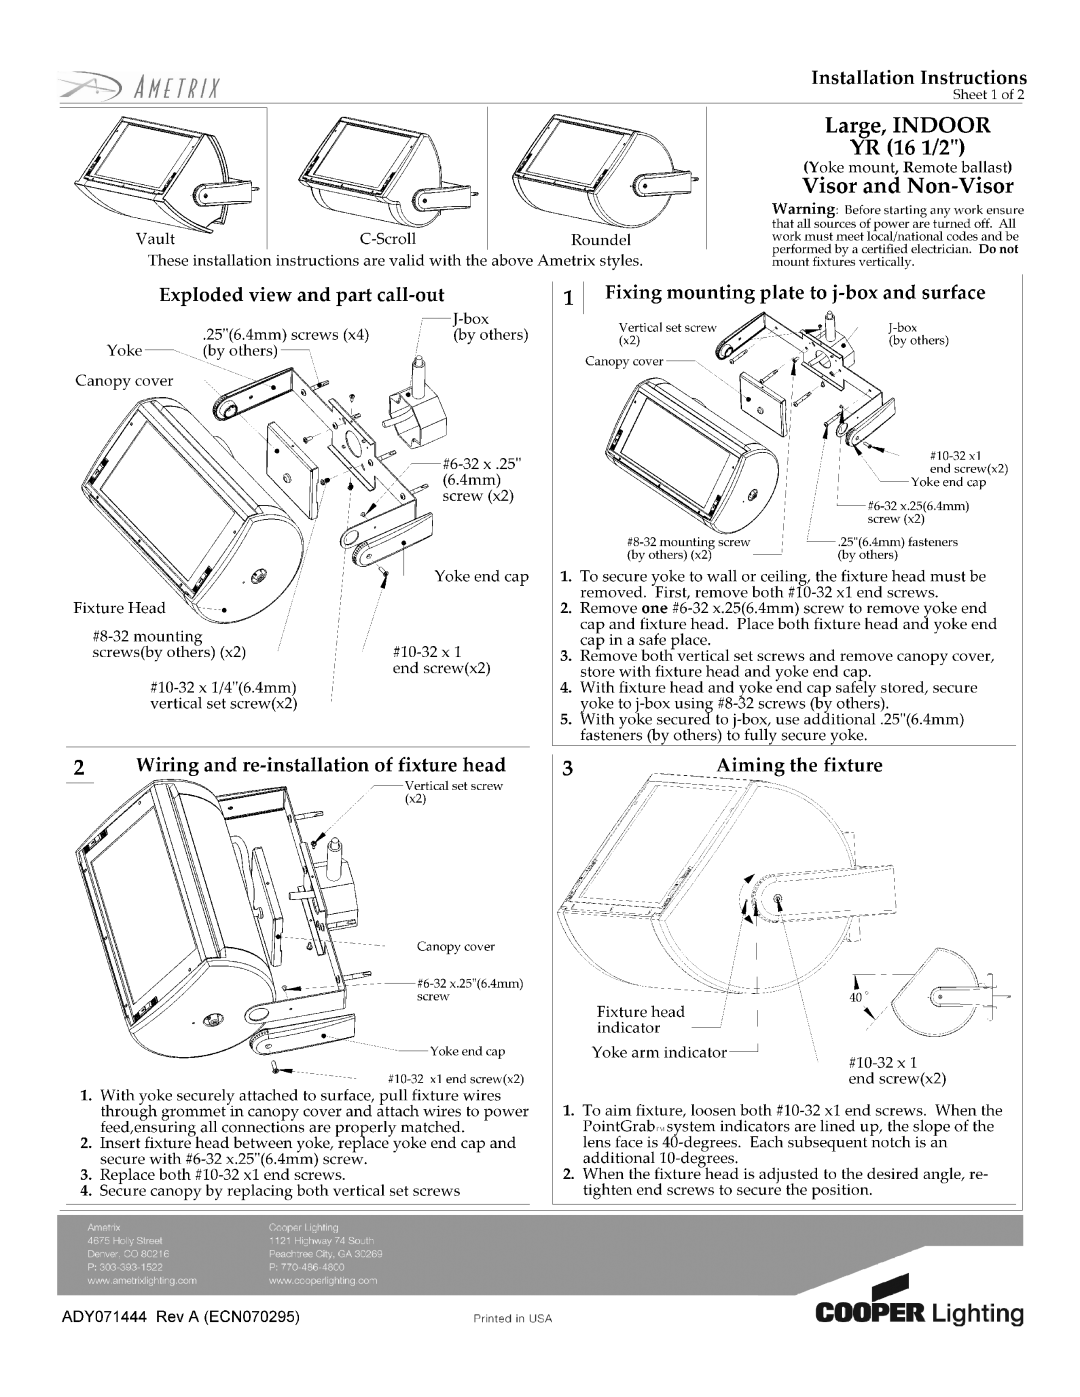 Cooper Lighting Vault, Roundel, C-Scroll manual 